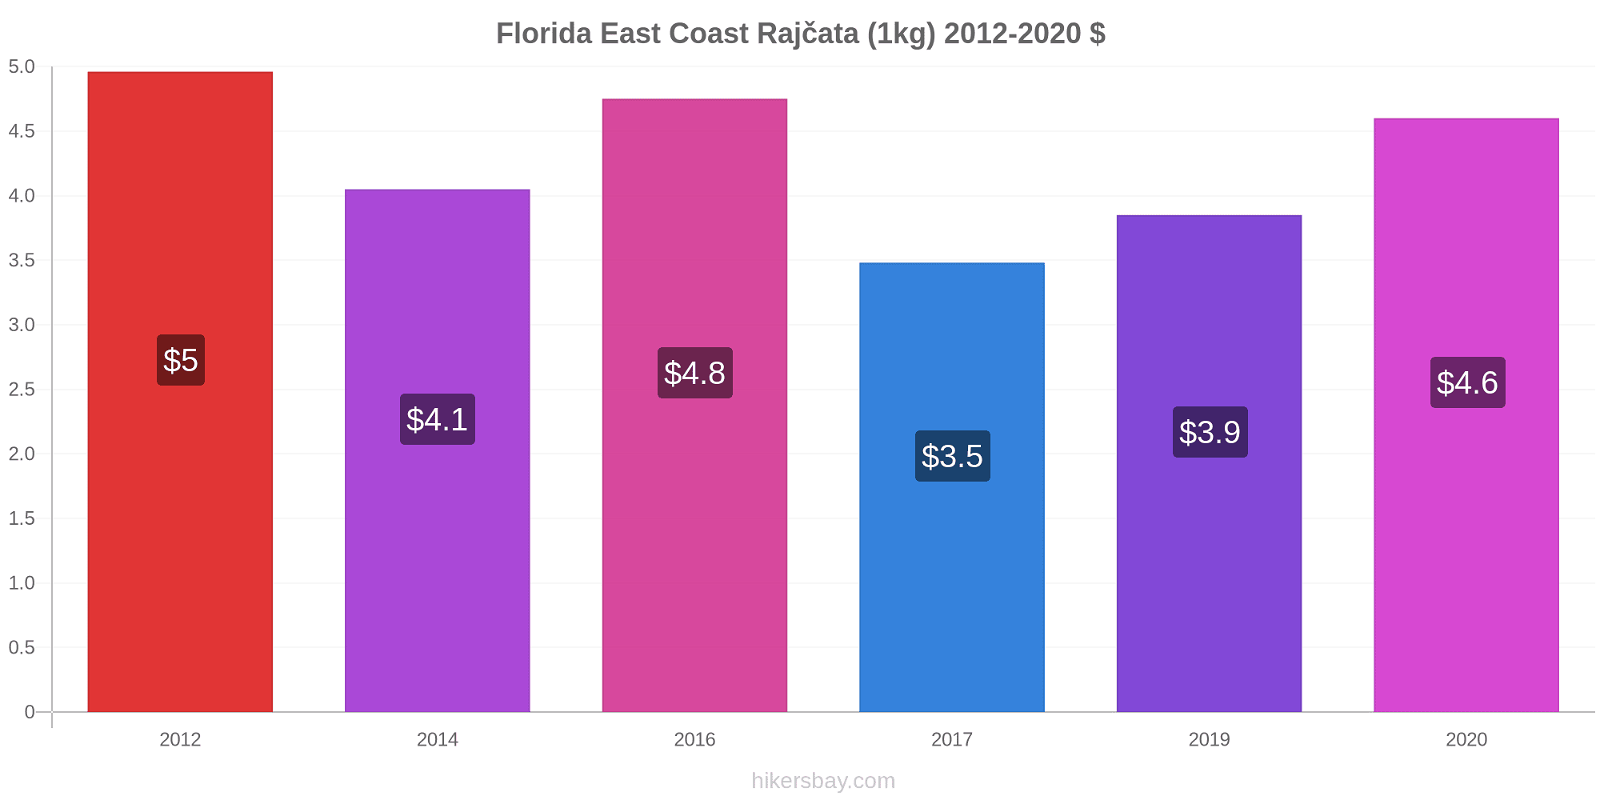 Florida East Coast změny cen Rajčata (1kg) hikersbay.com